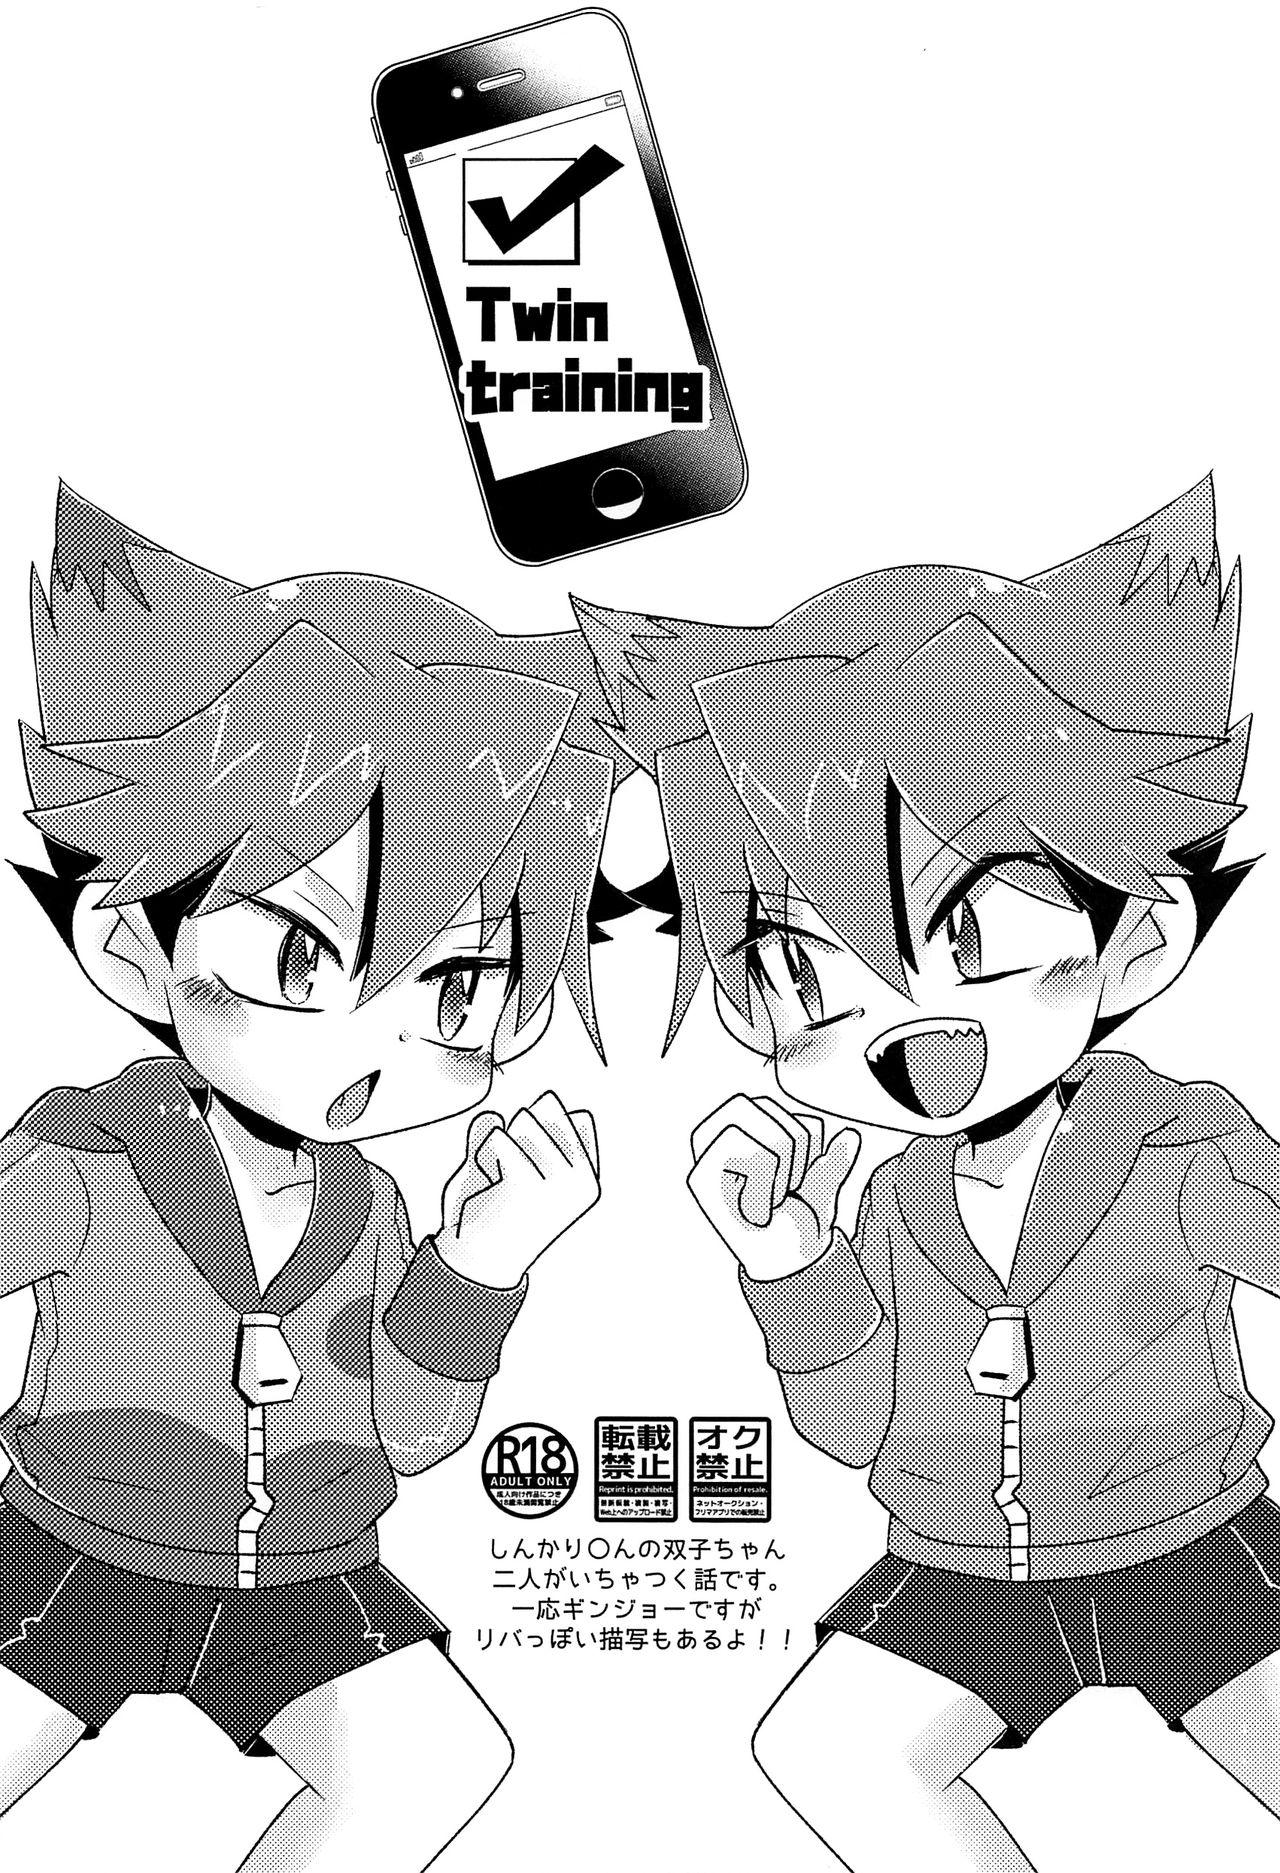 Twin training 4